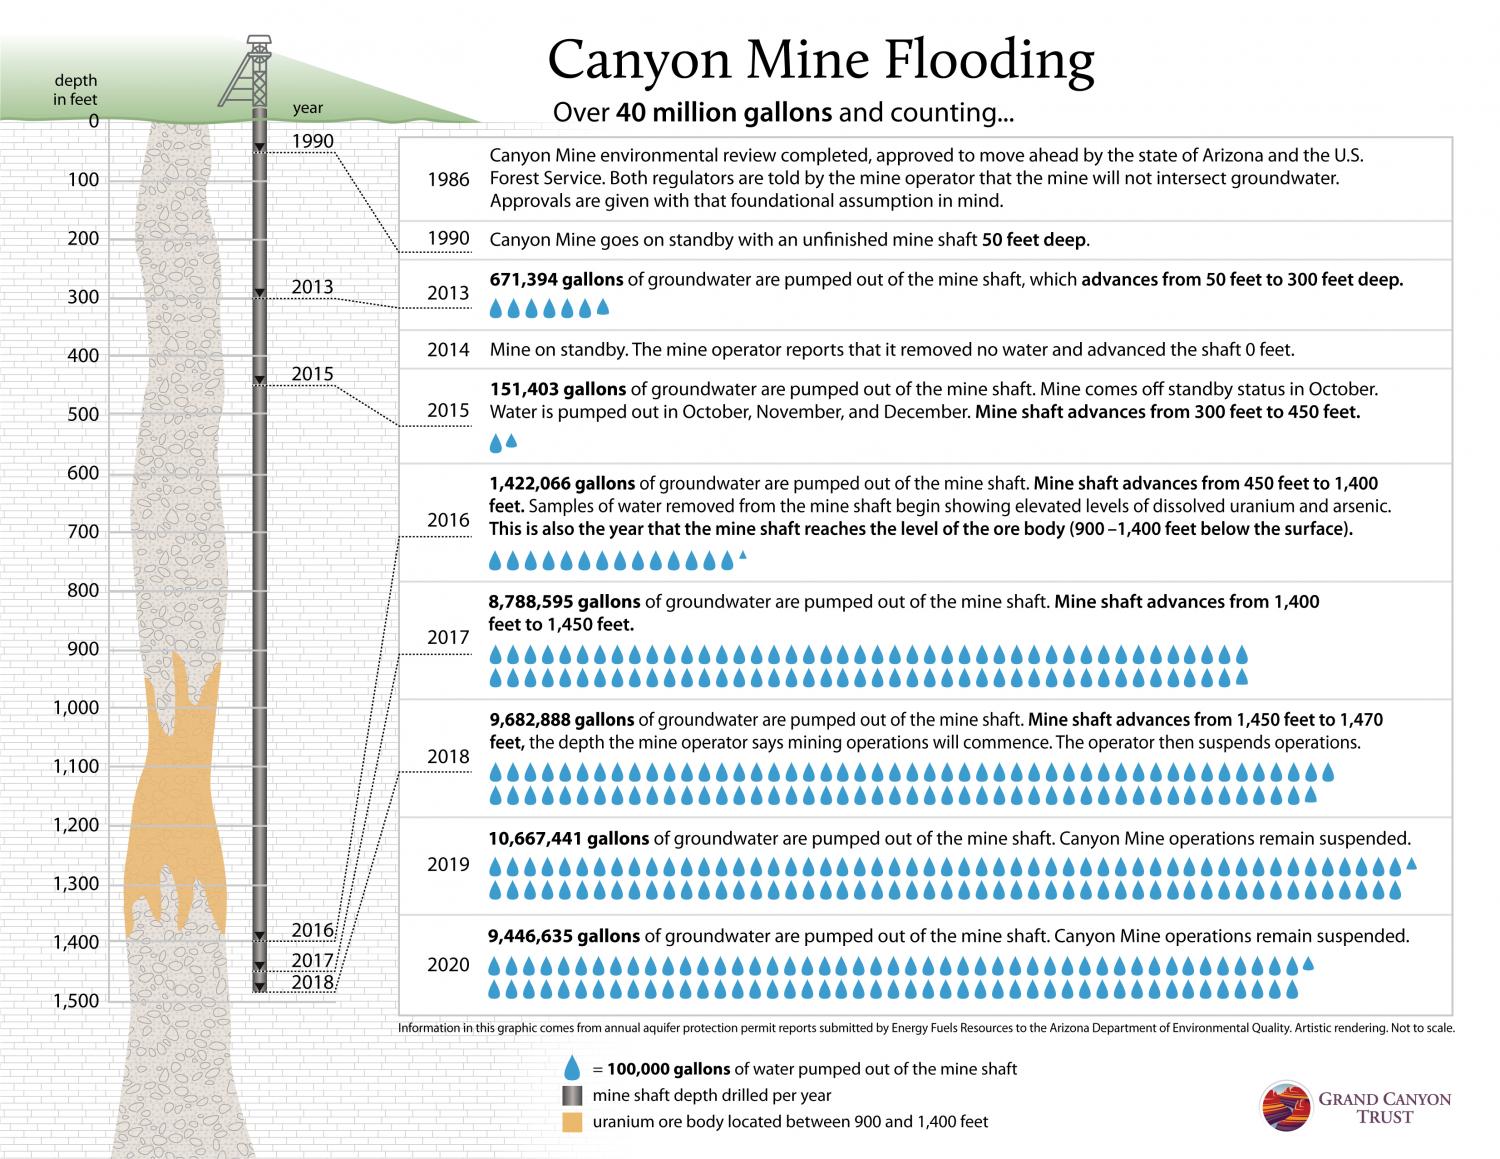 Flooding at Canyon Mine